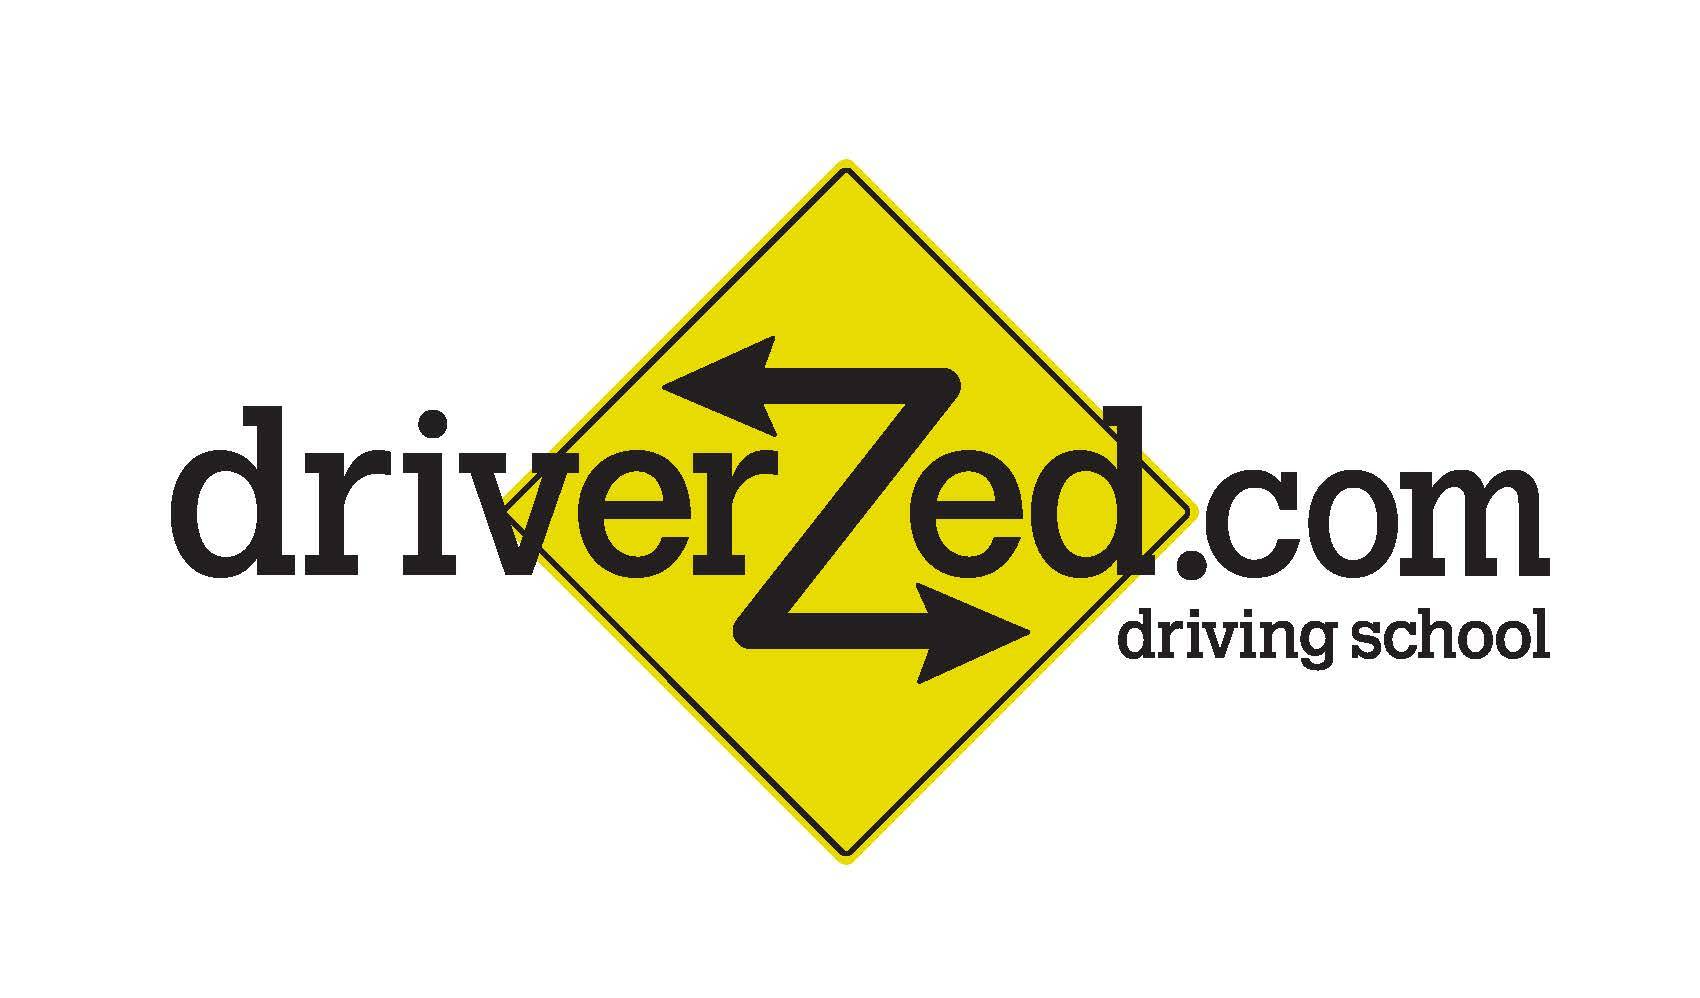 DriverZed